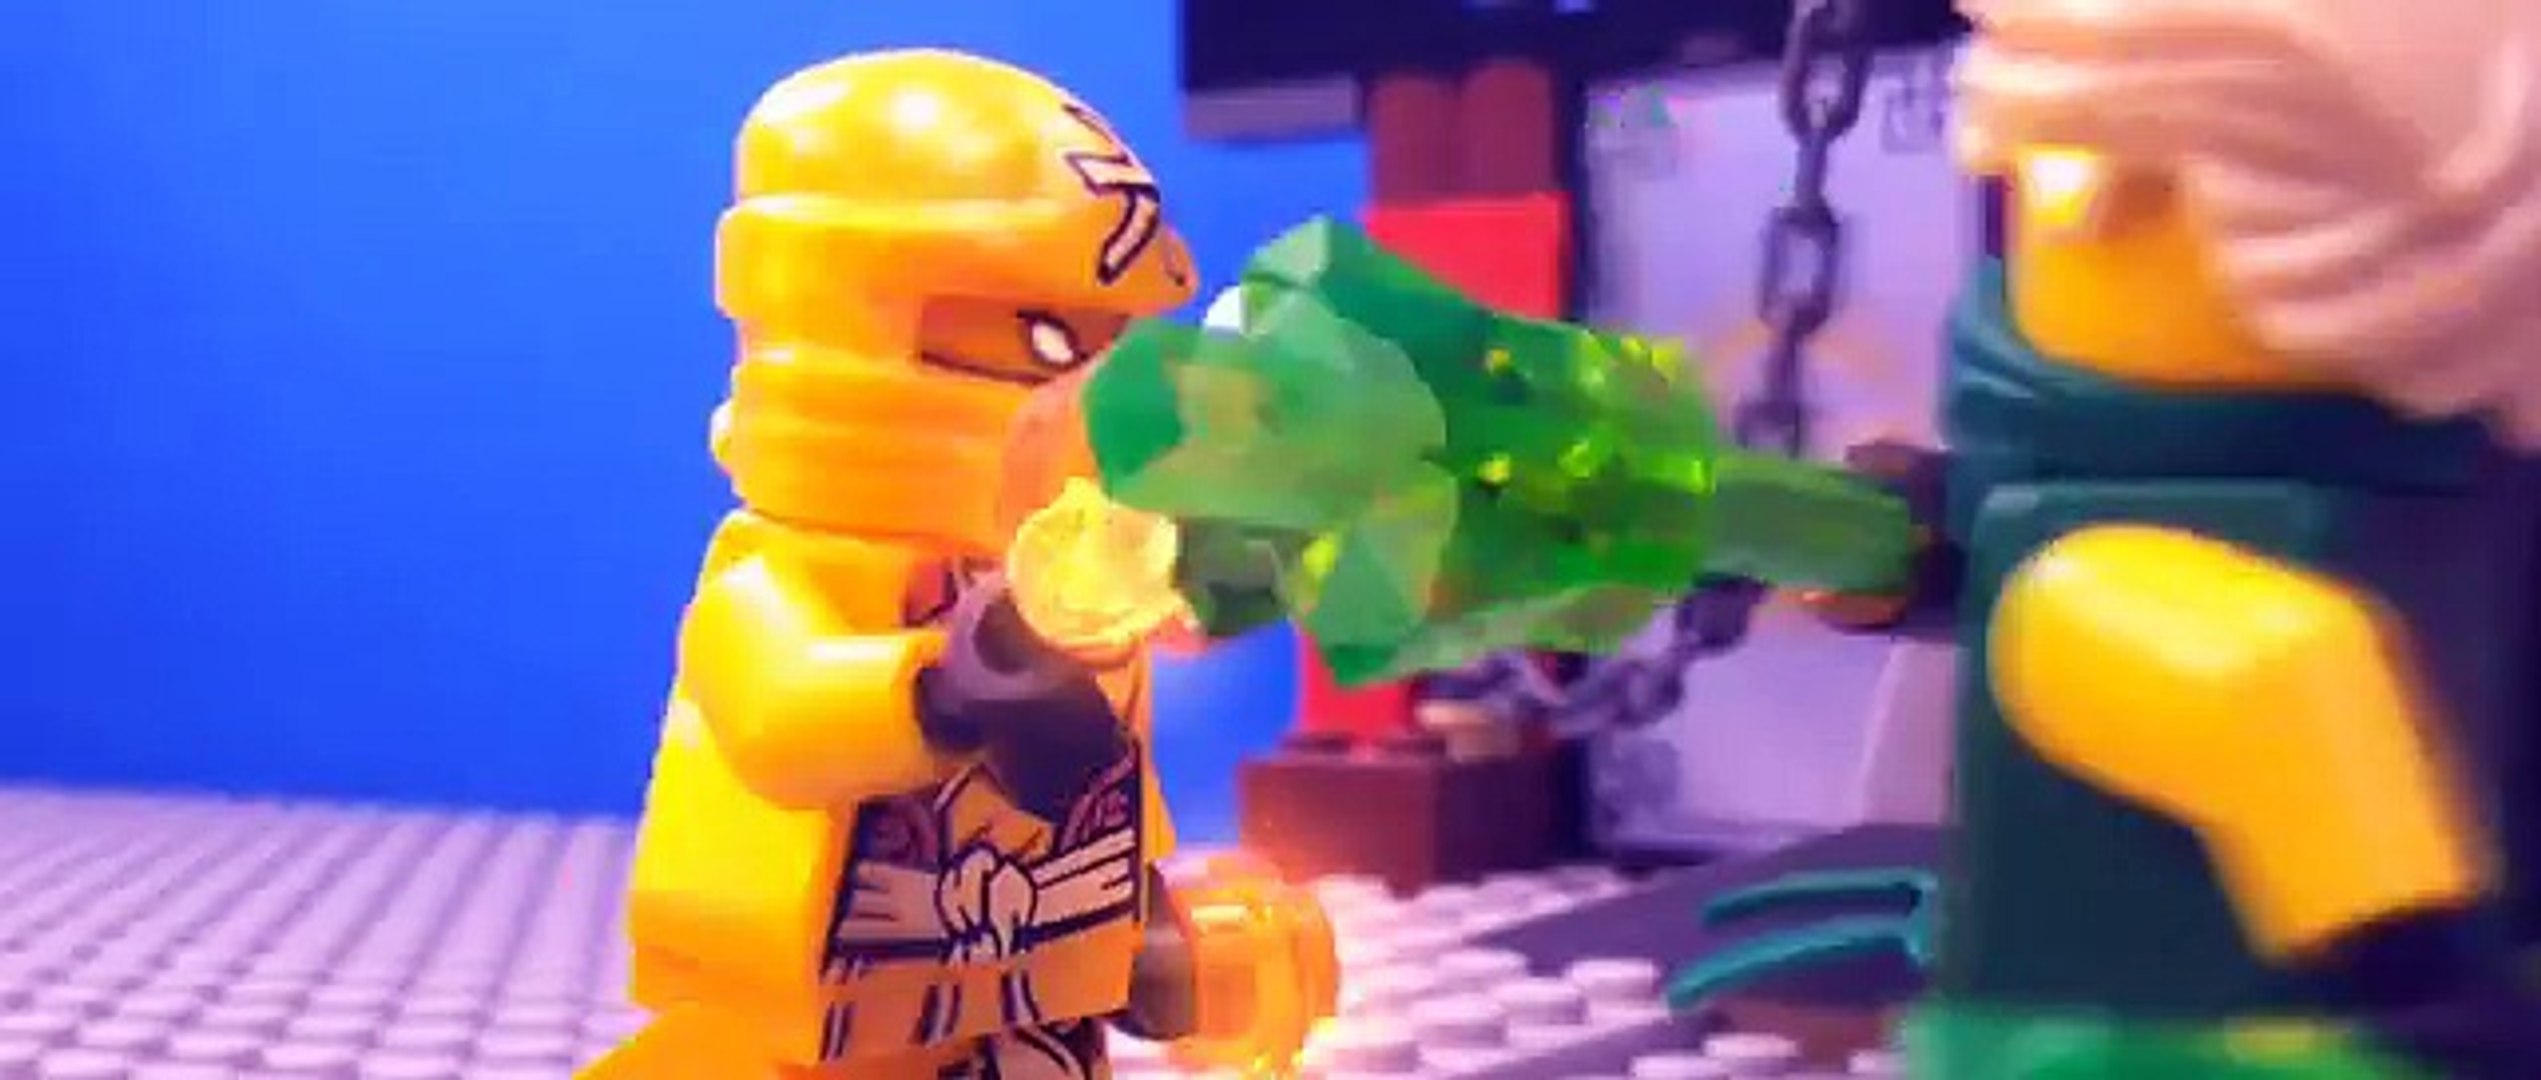 Lego Ninjago - Kai vs Lloyd (Tournament) - video Dailymotion